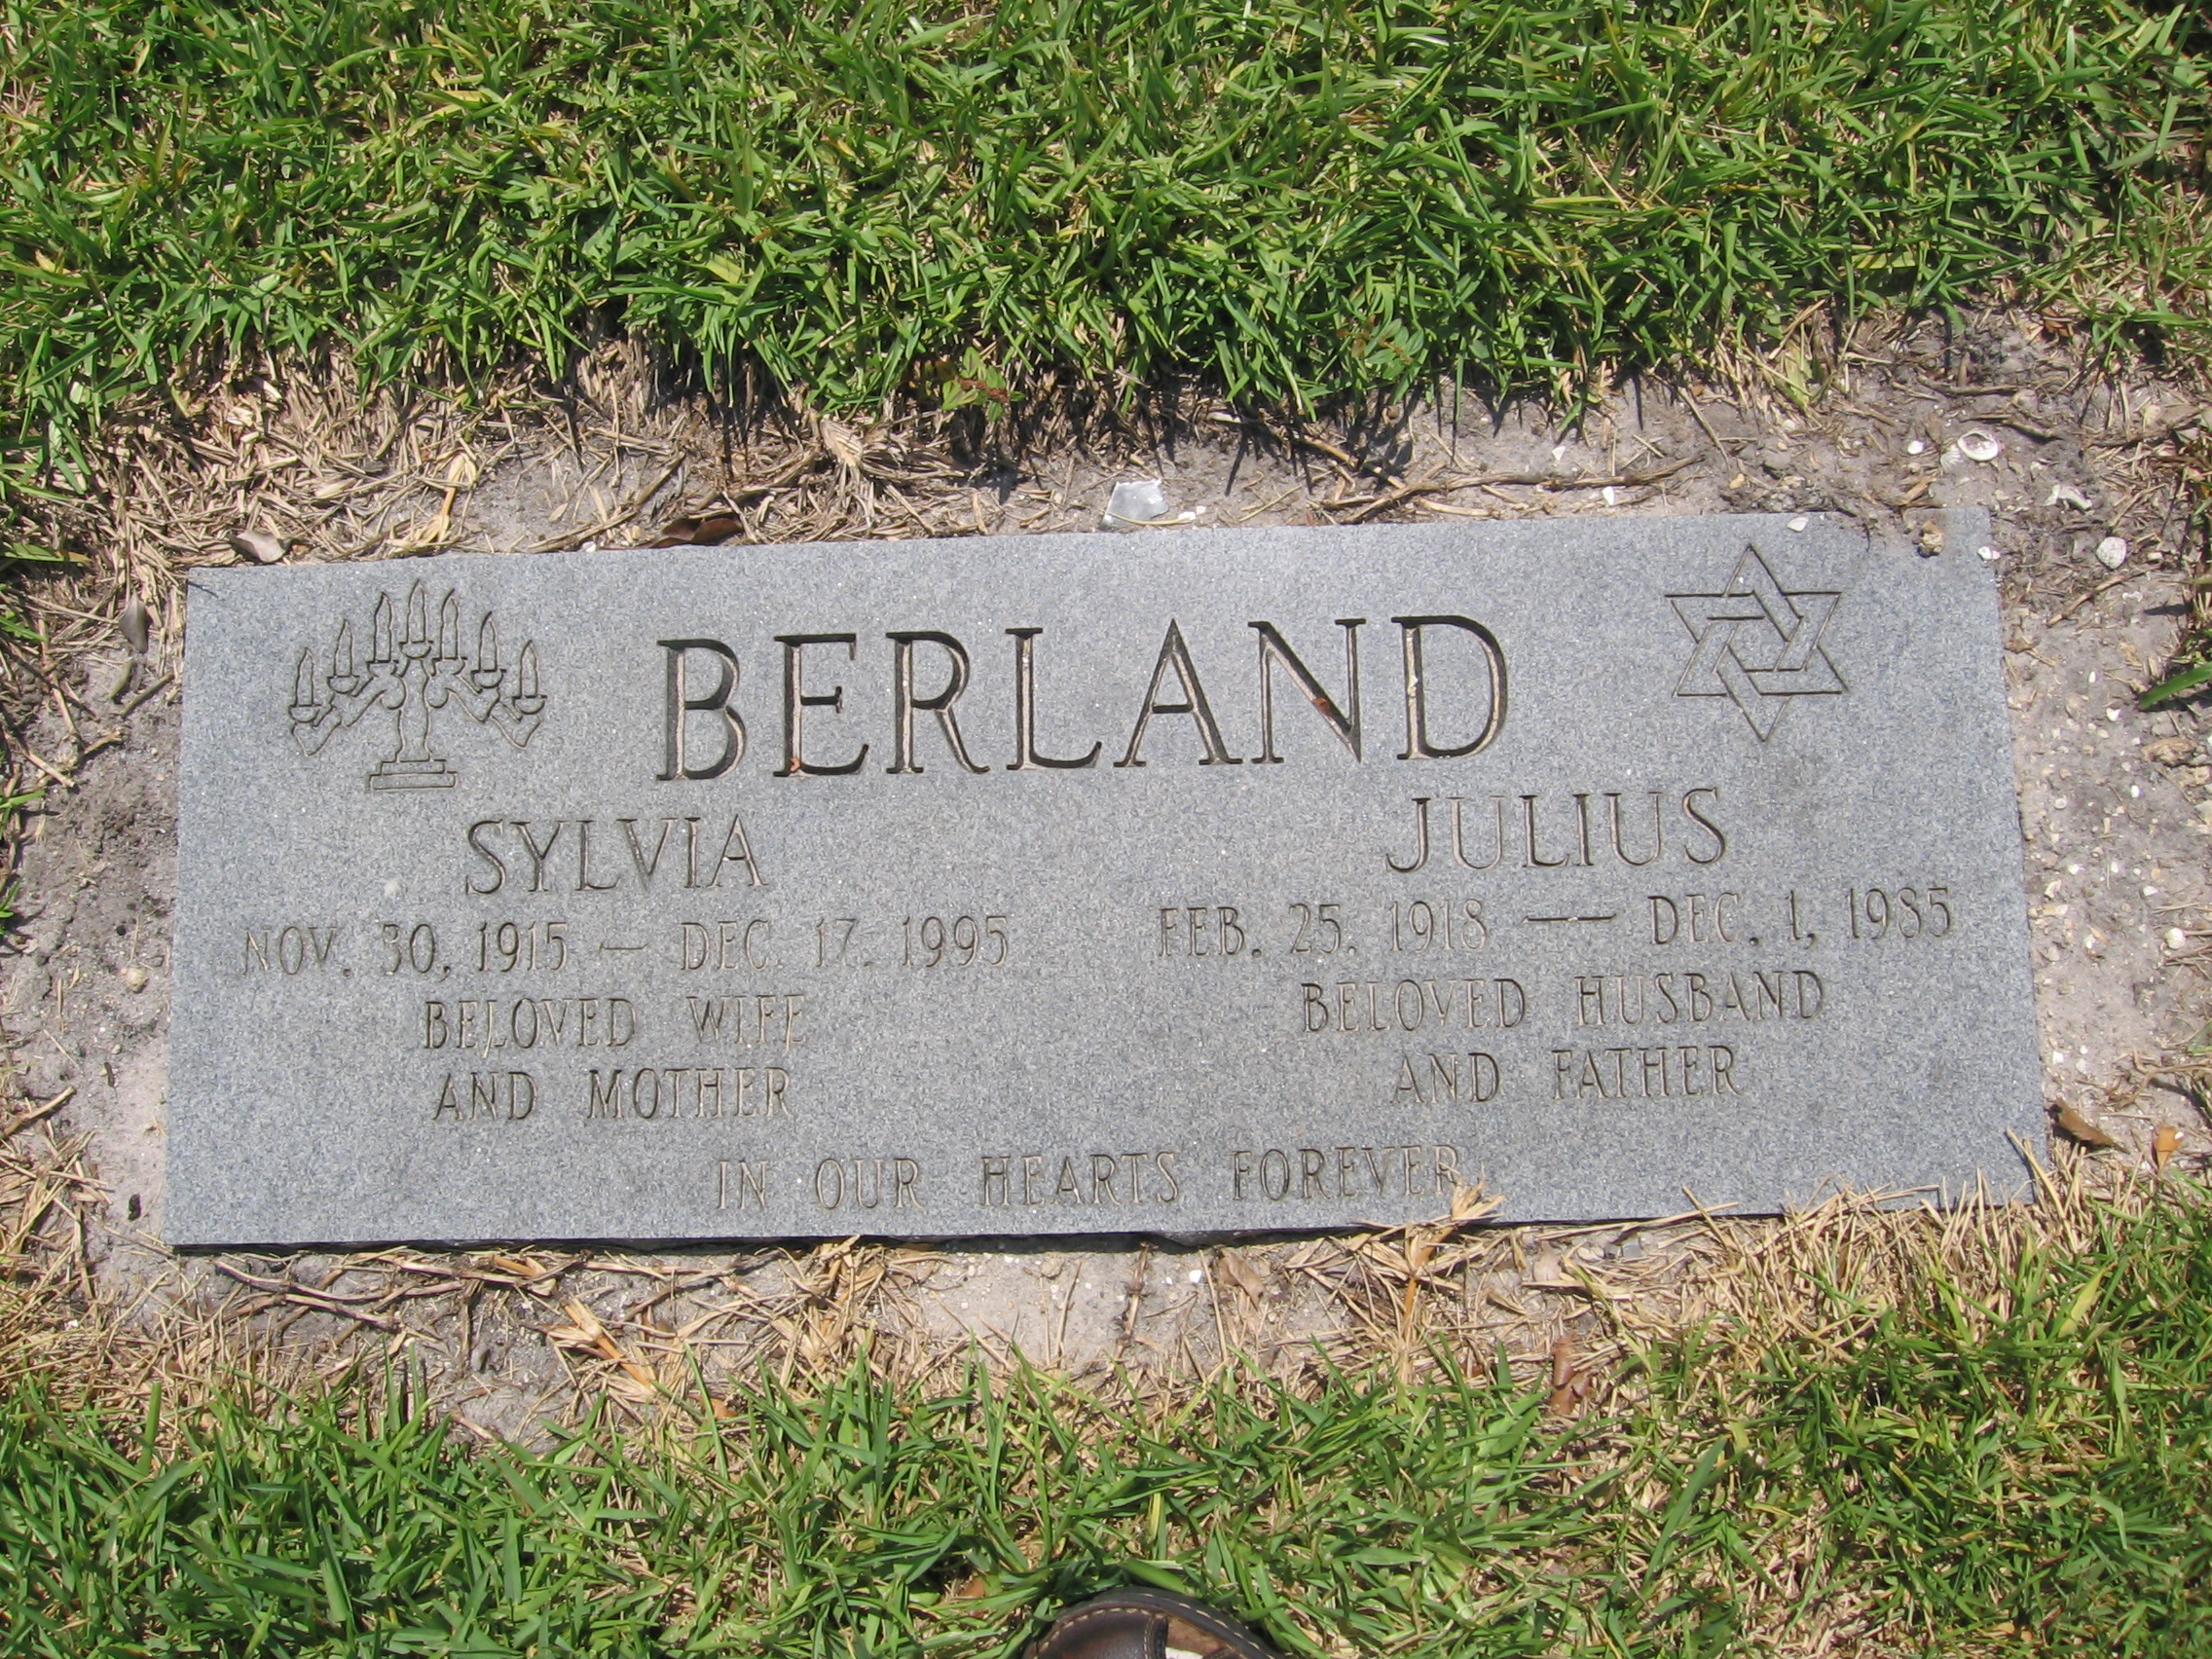 Julius Berland